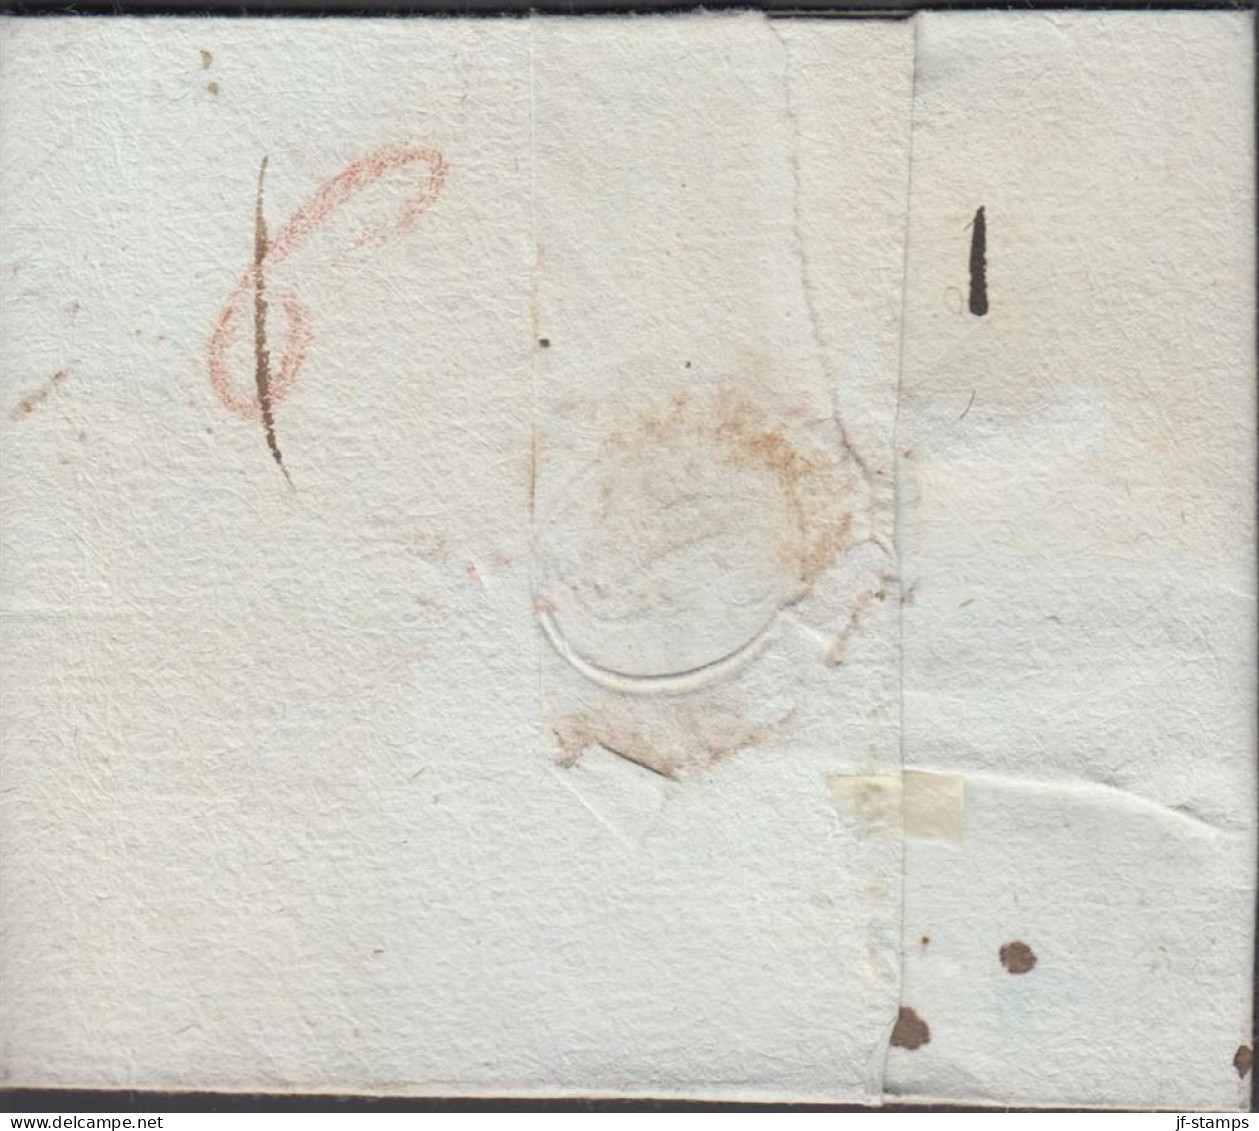 1821. DEUTSCHLAND. Fine Small Old Cover Cancelled WORMS 23 JUL 1821. Postage Marking In Brownred. More Tha... - JF436634 - Préphilatélie